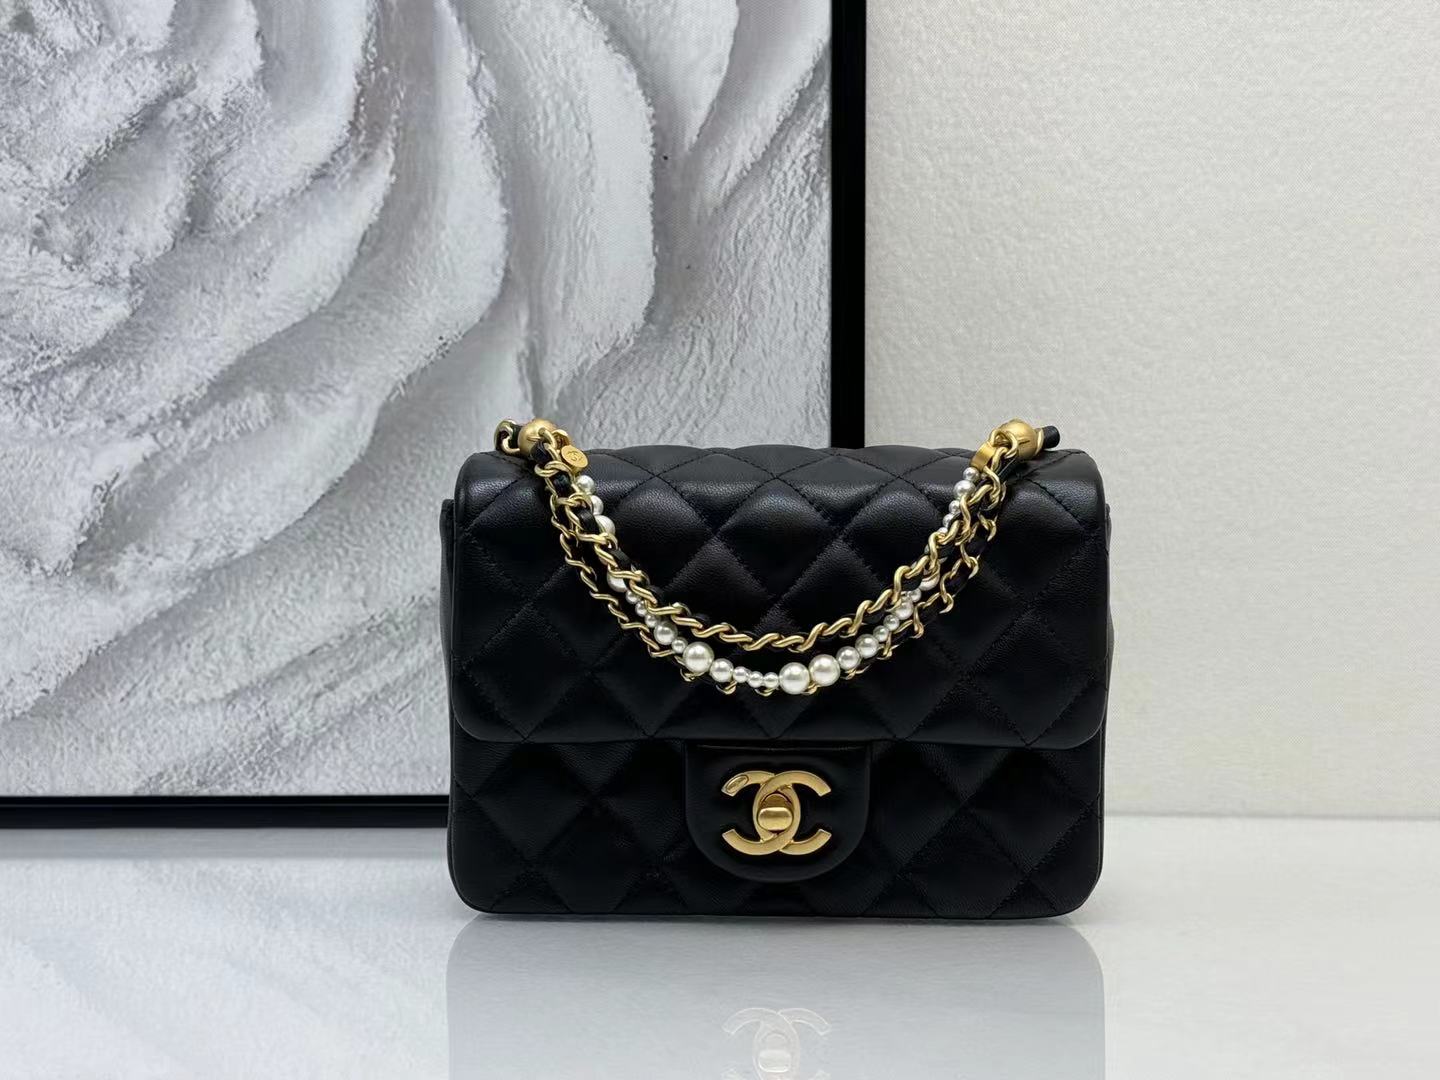 Chanel bag size 12cm CHB713